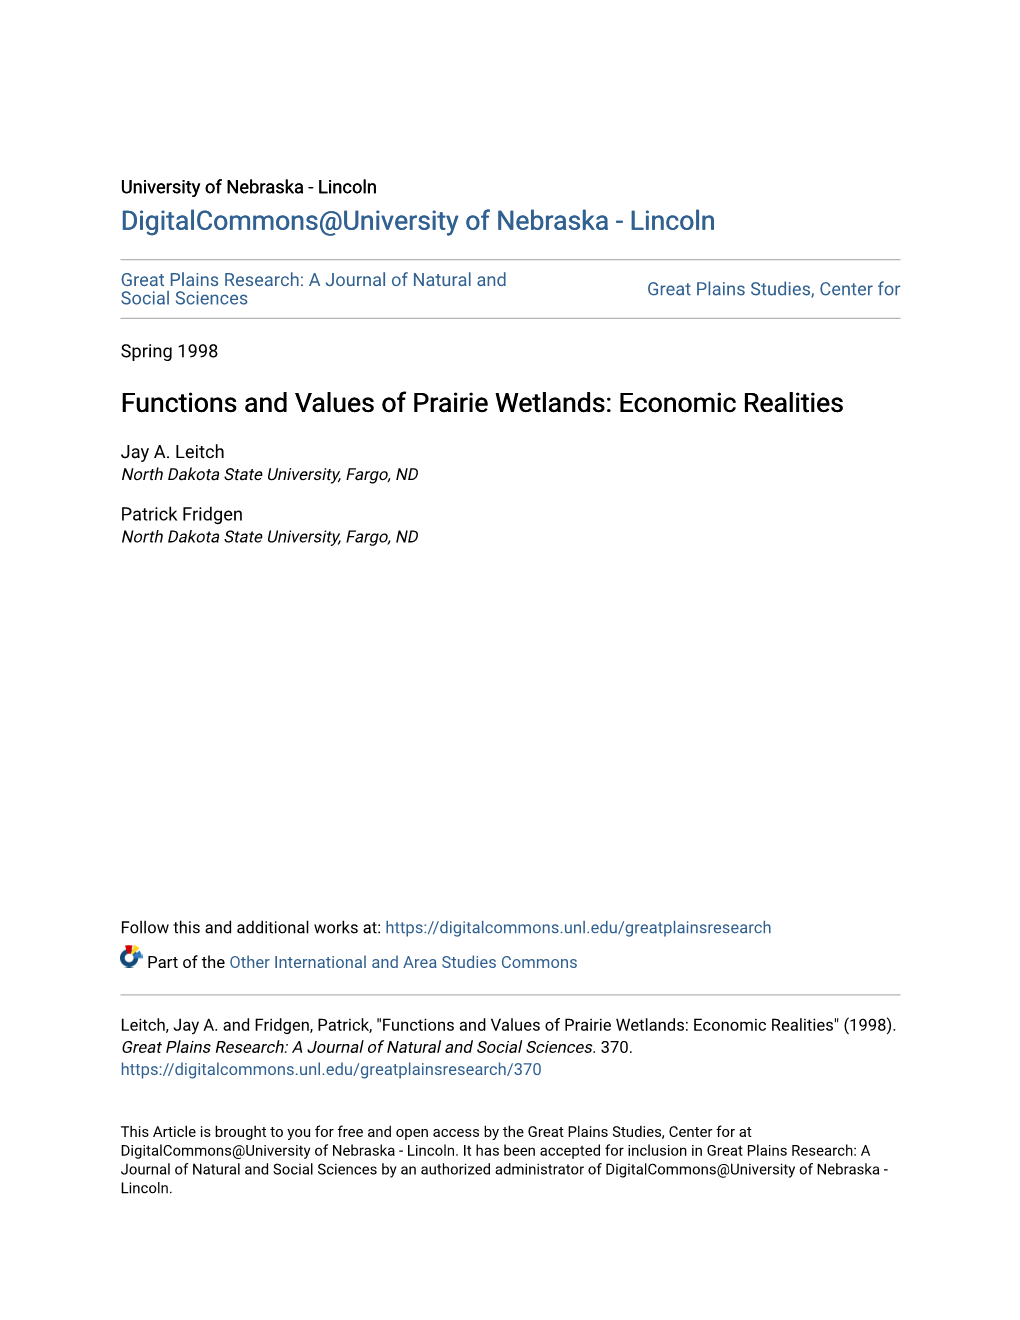 Functions and Values of Prairie Wetlands: Economic Realities